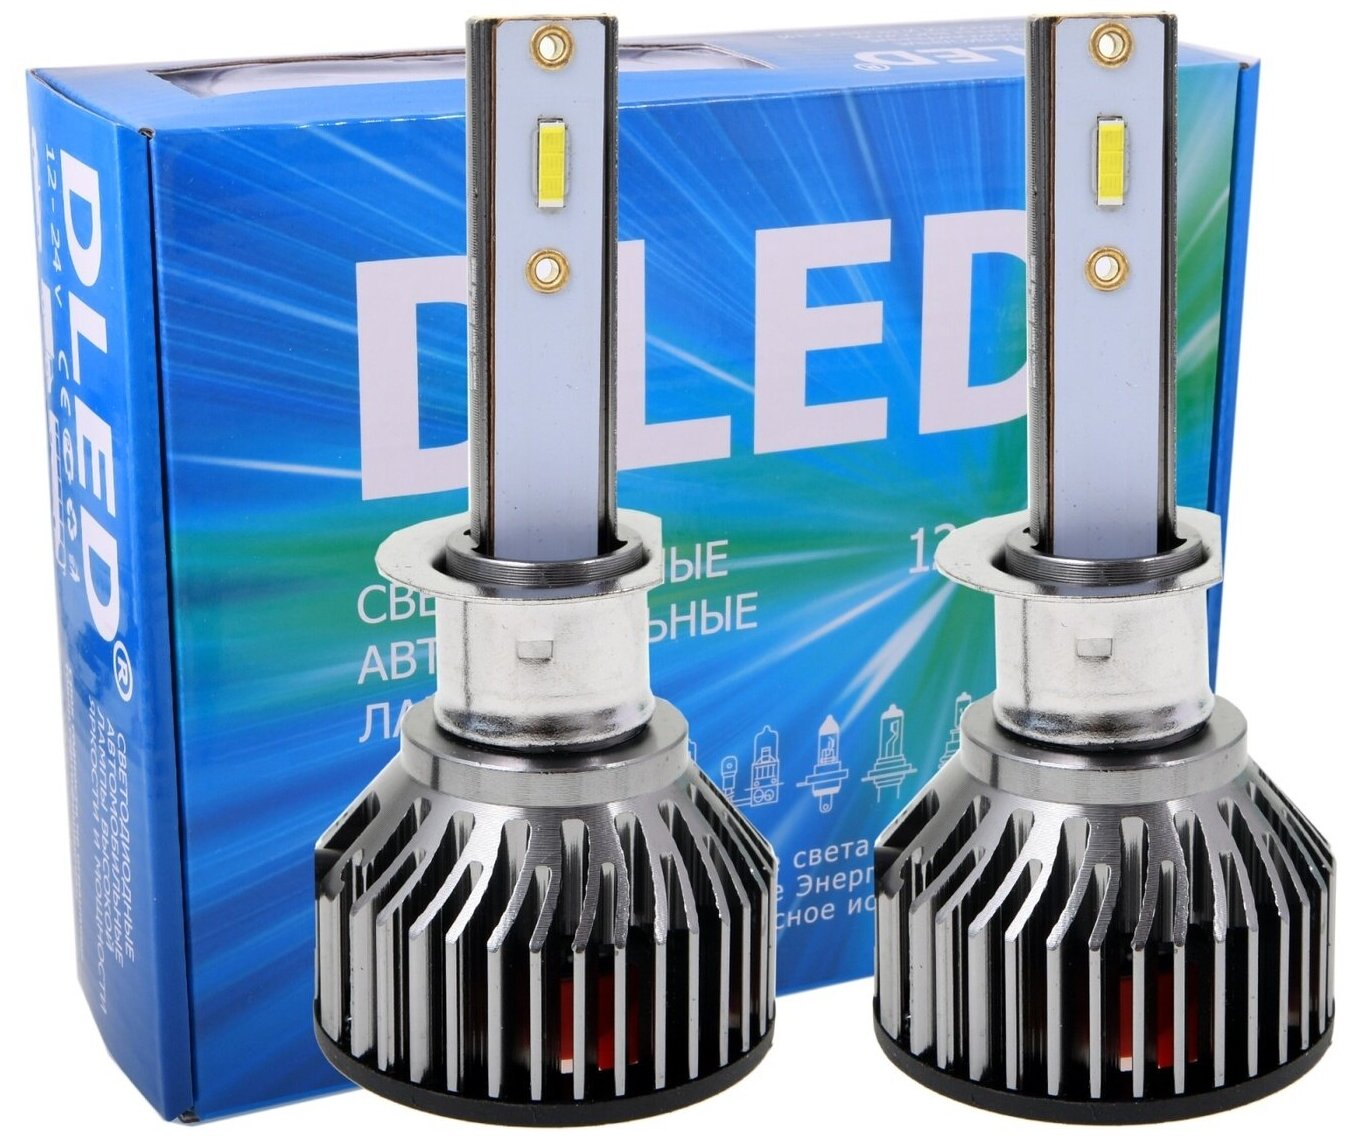 Автомобильная светодиодная лампа H1 DLED Ultimate S (Комплект 2 лампы)